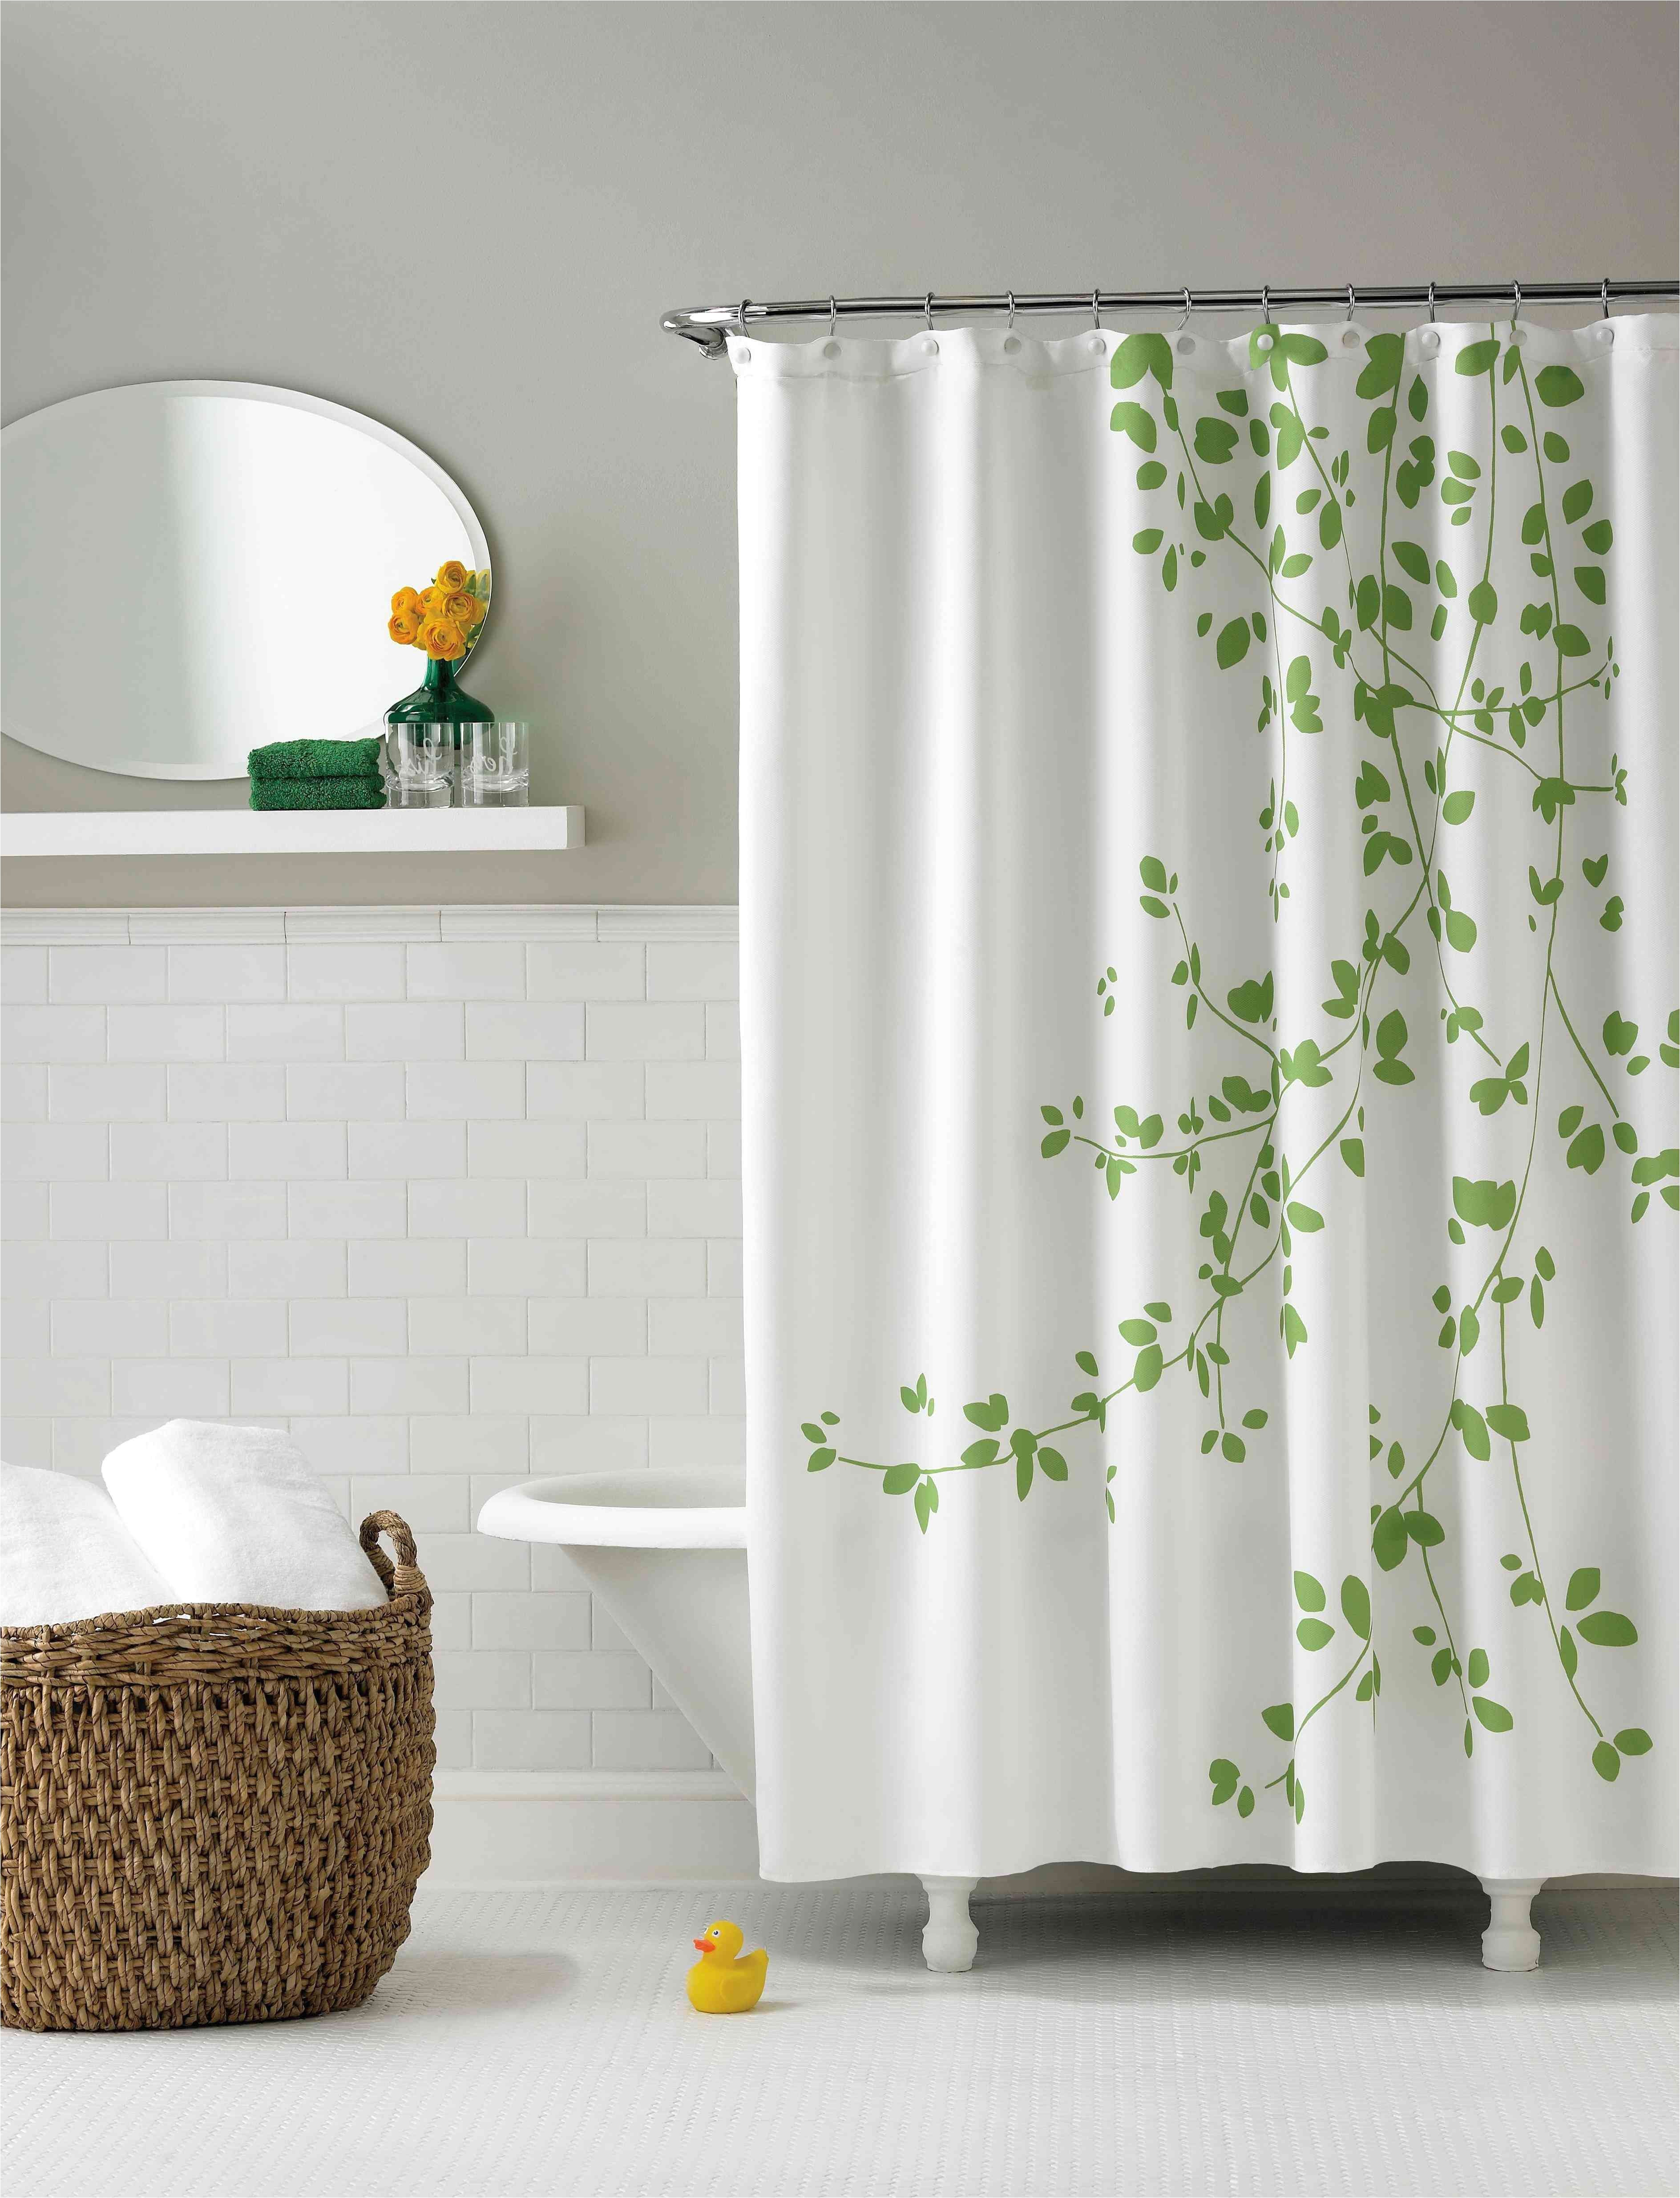 dandelion shower curtain best furniture high end shower curtains elegant dillards curtains 0d